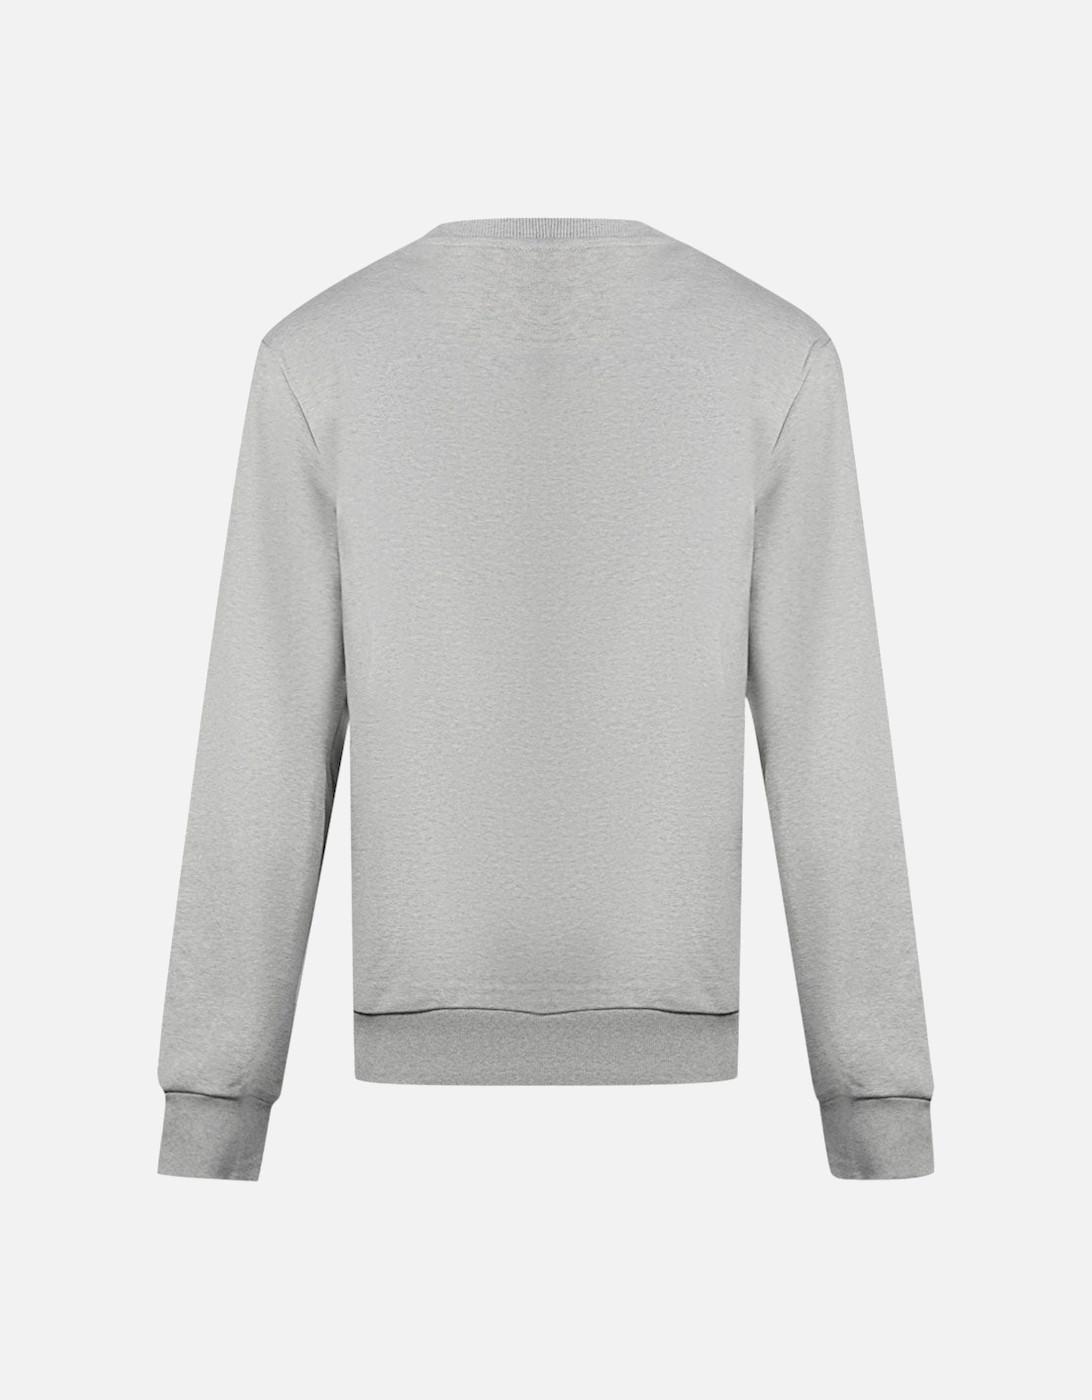 S-Girk-K13 9CB Grey Sweatshirt